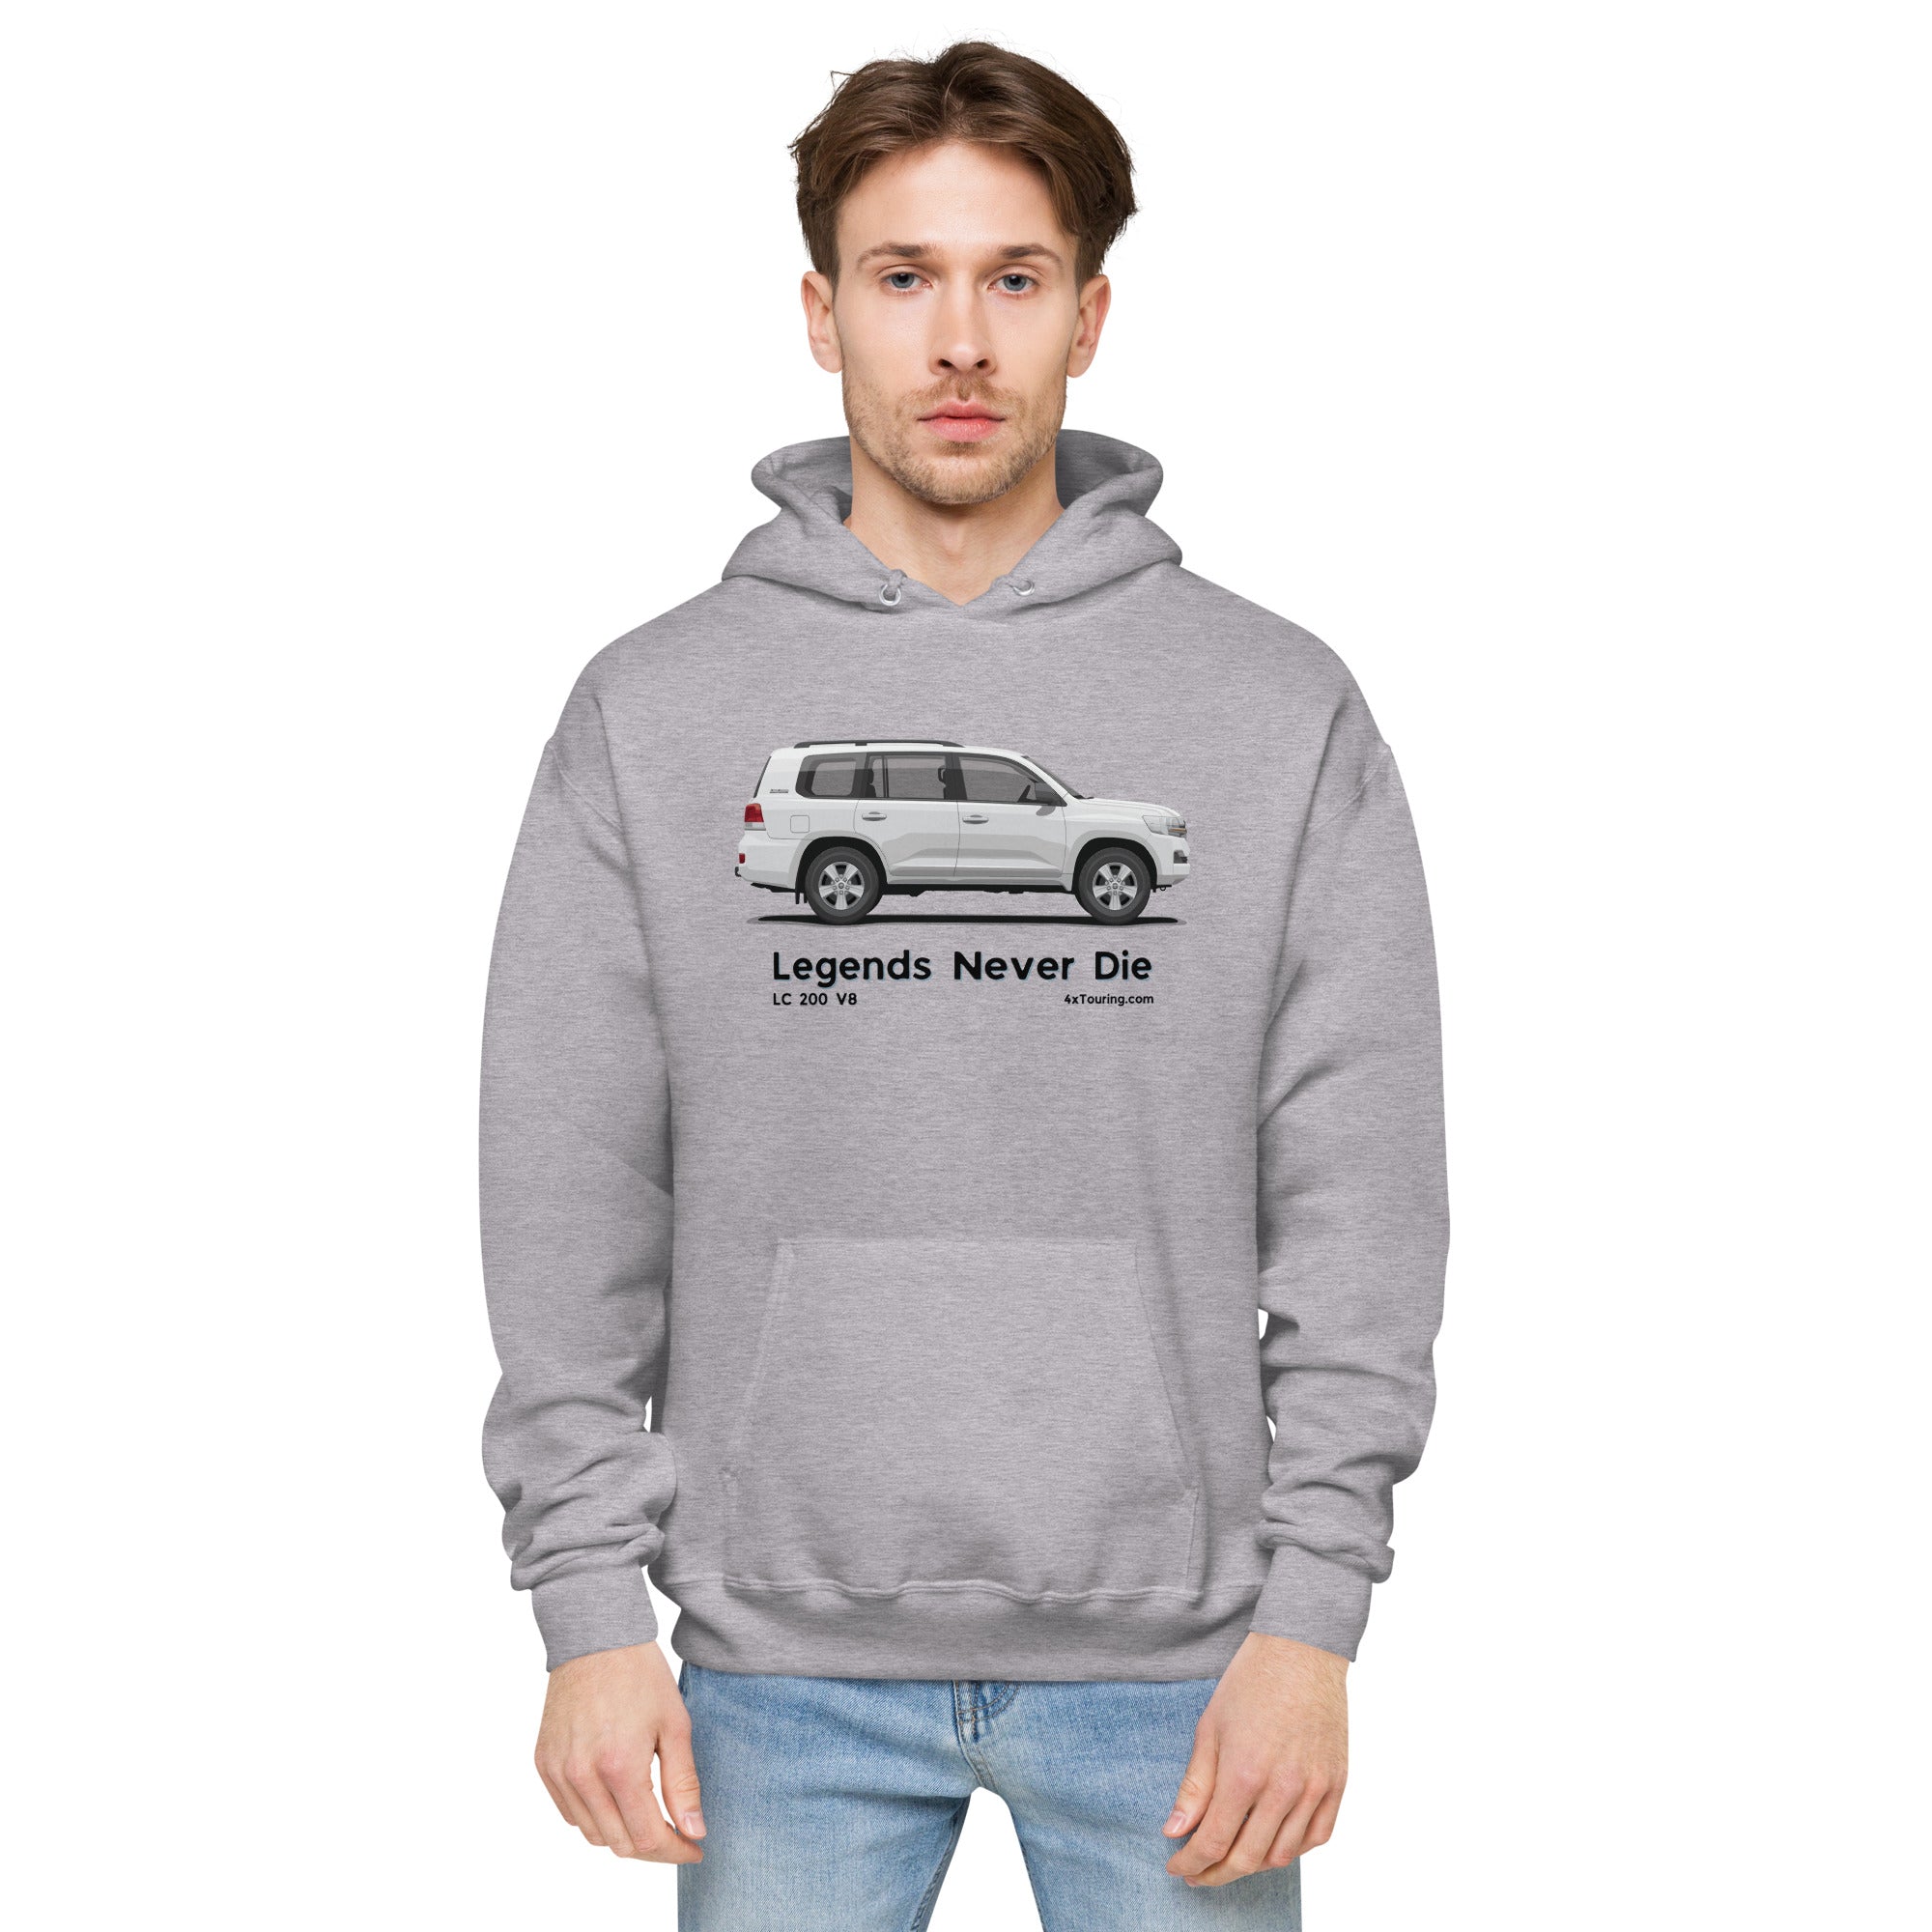 Toyota Land Cruiser 100 Series - Unisex fleece hoodie